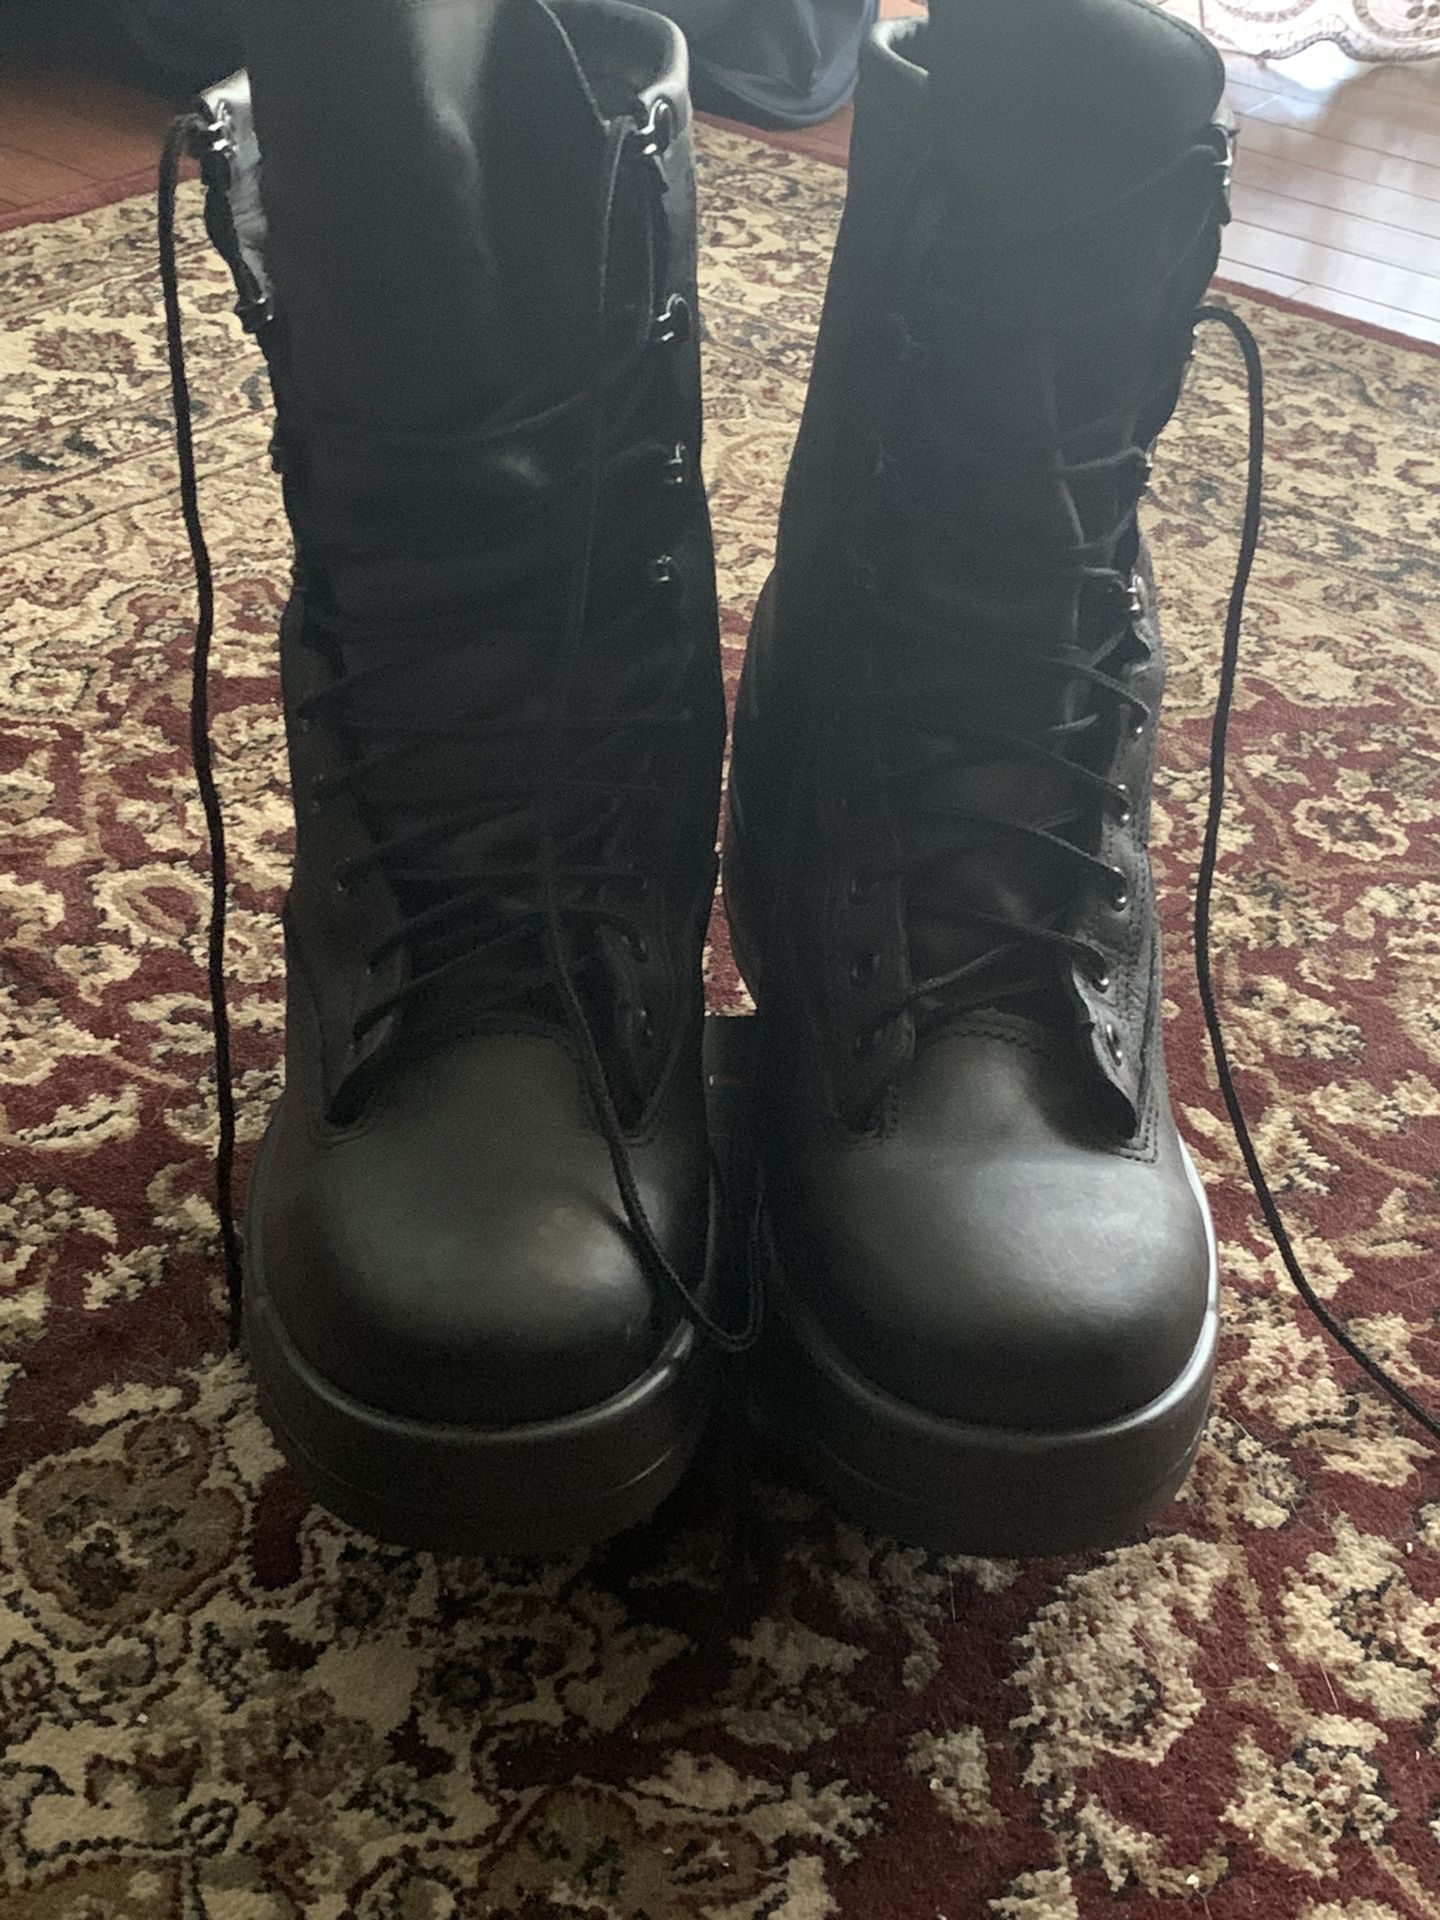 Vibram Military Boots 